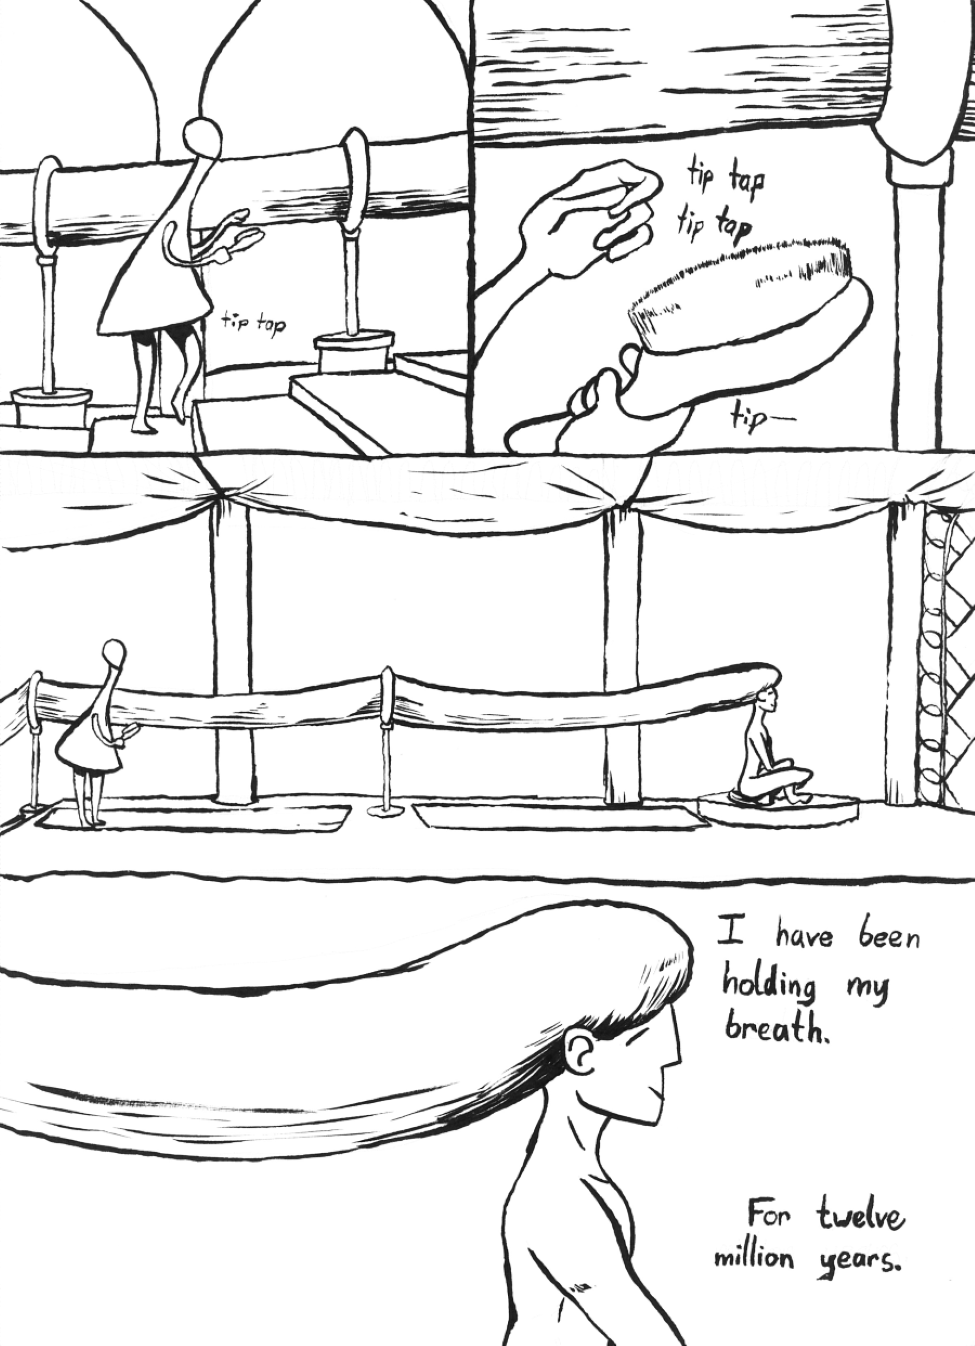 Comic: I Held My Breath page 1